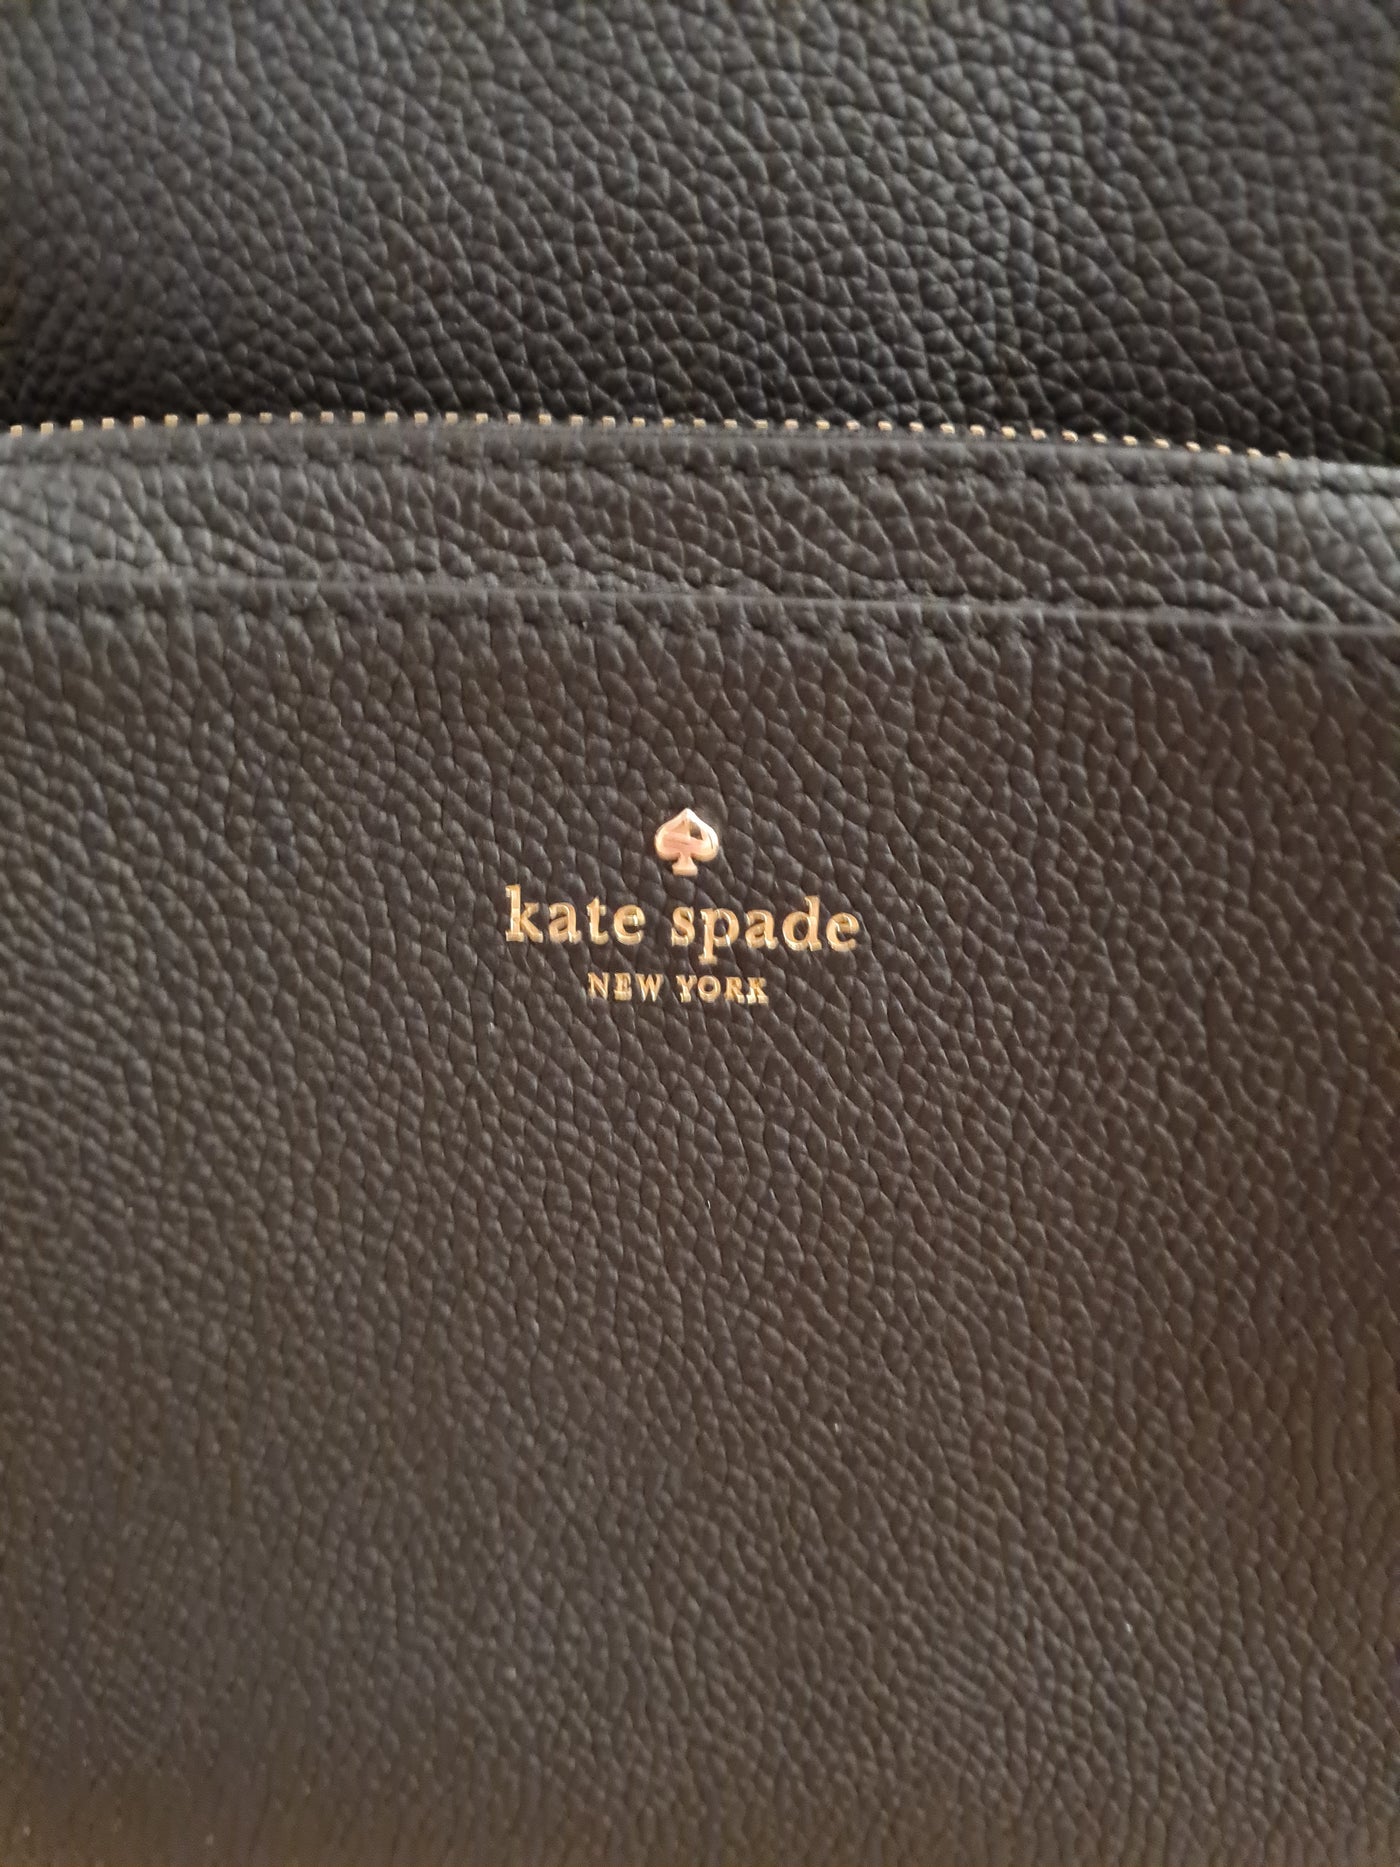 Kate Spade Black Backpack